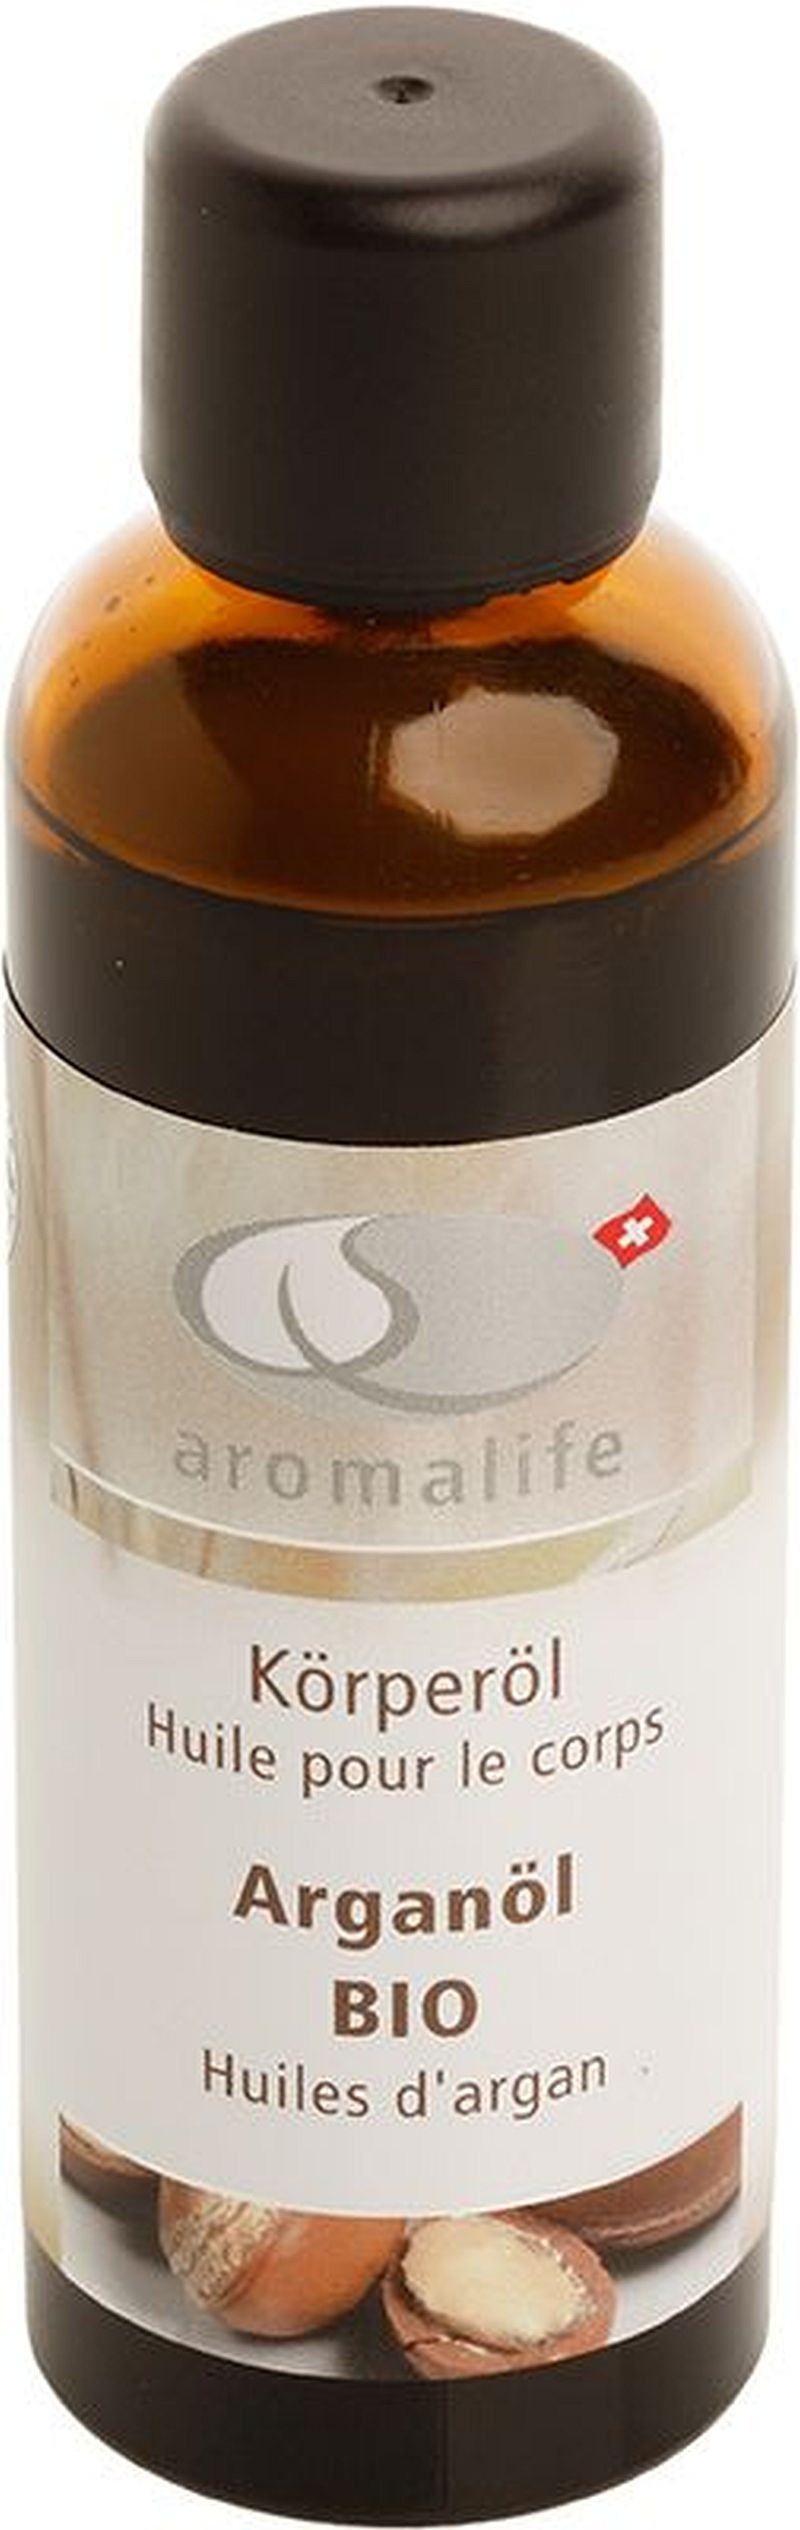 Image of Aromalife Arganöl Bio (75ml)